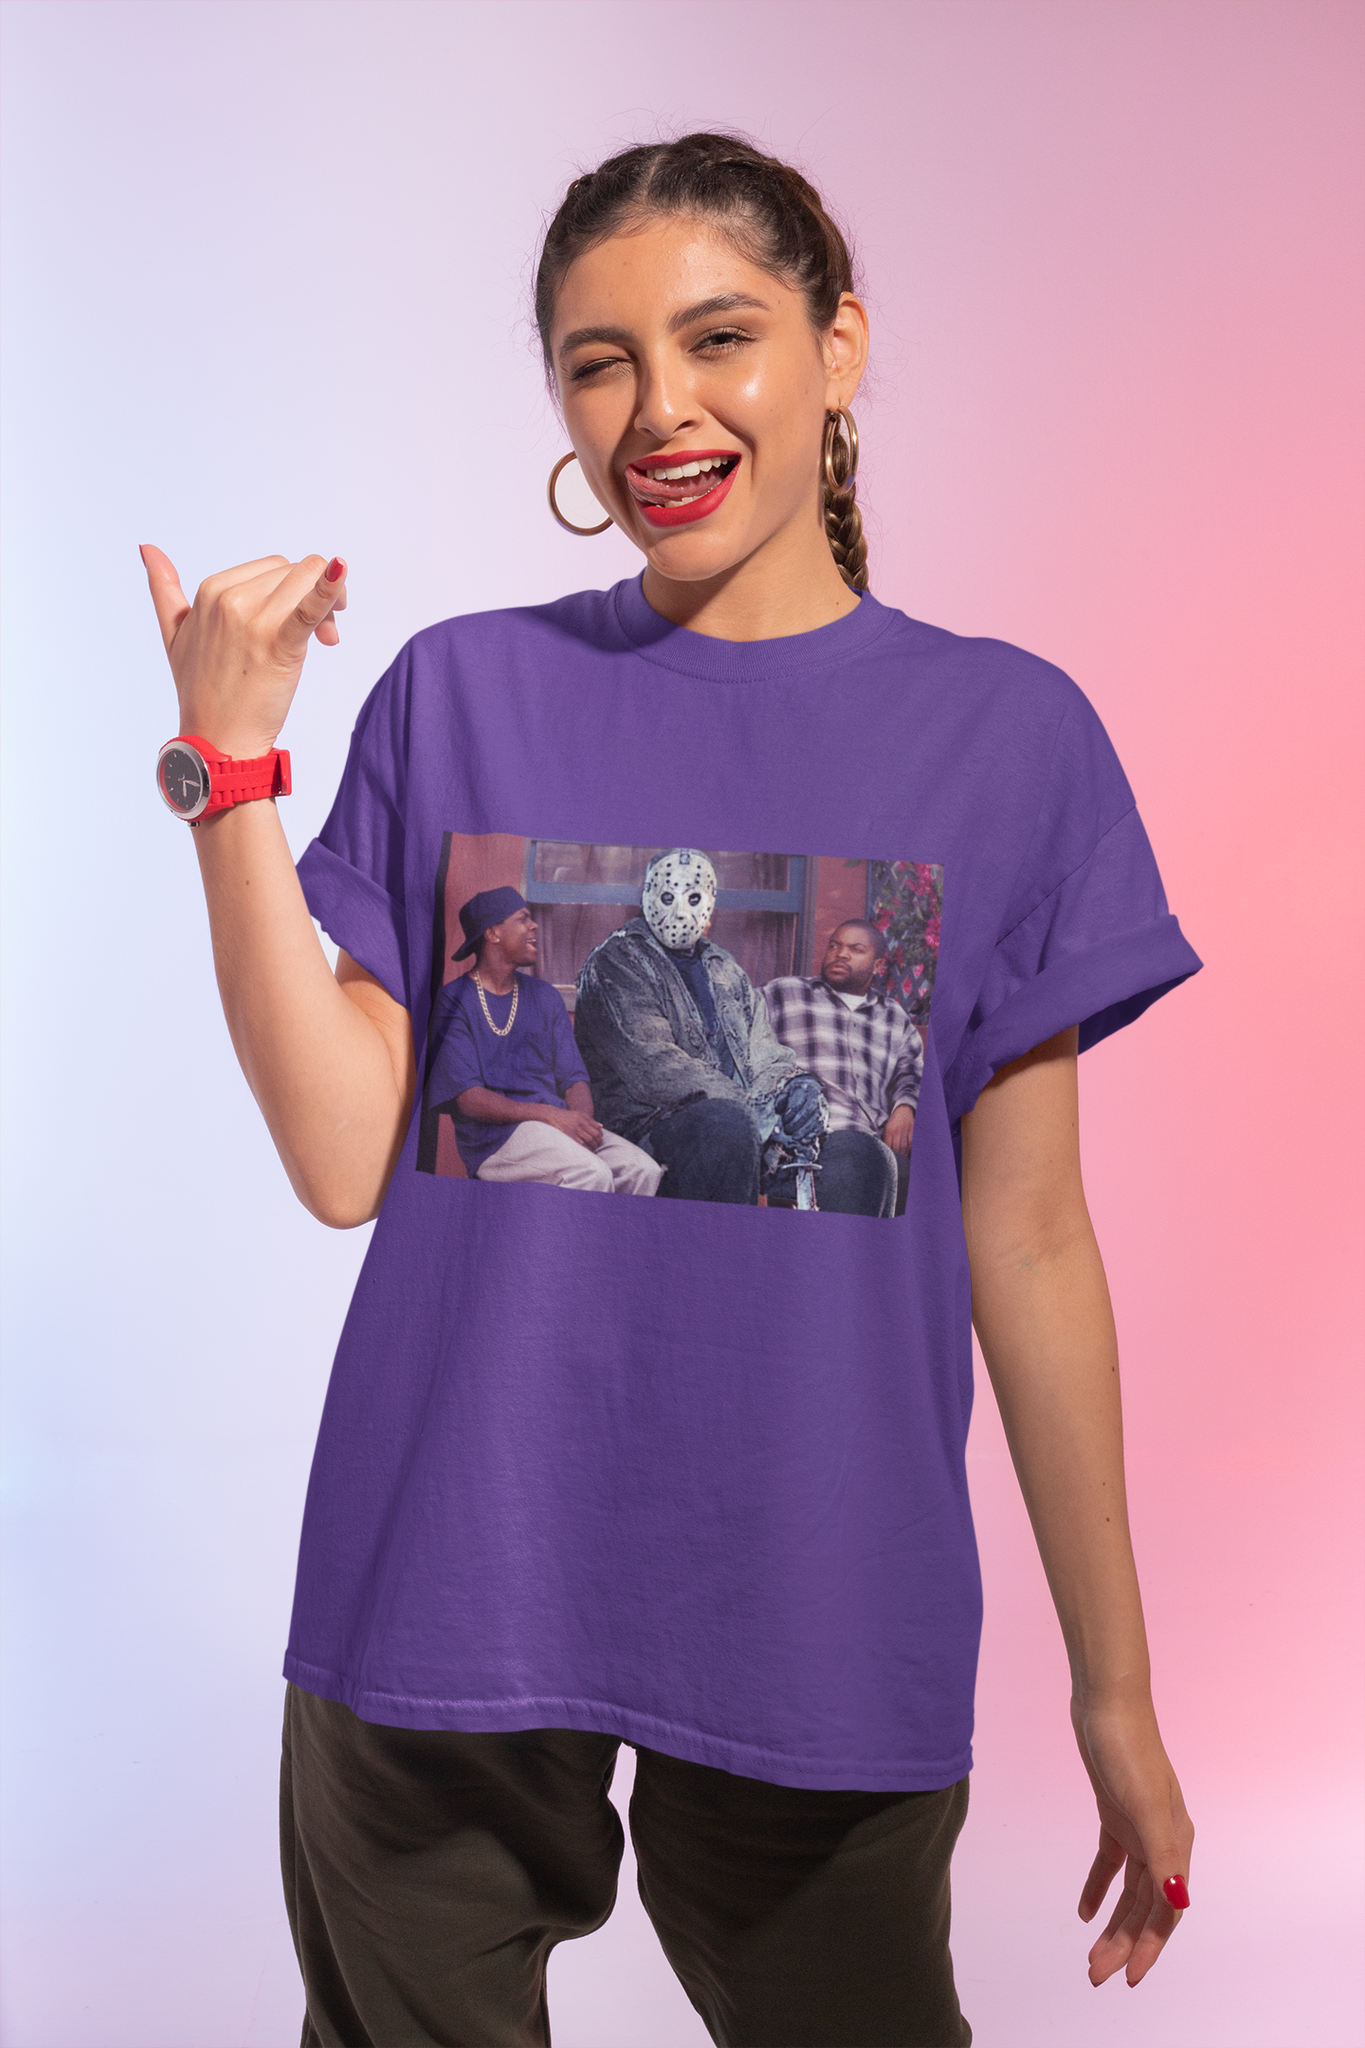 Friday 13th T Shirt, Jason Voorhees T Shirt, Damn Funny Meme Tshirt, Halloween Gifts